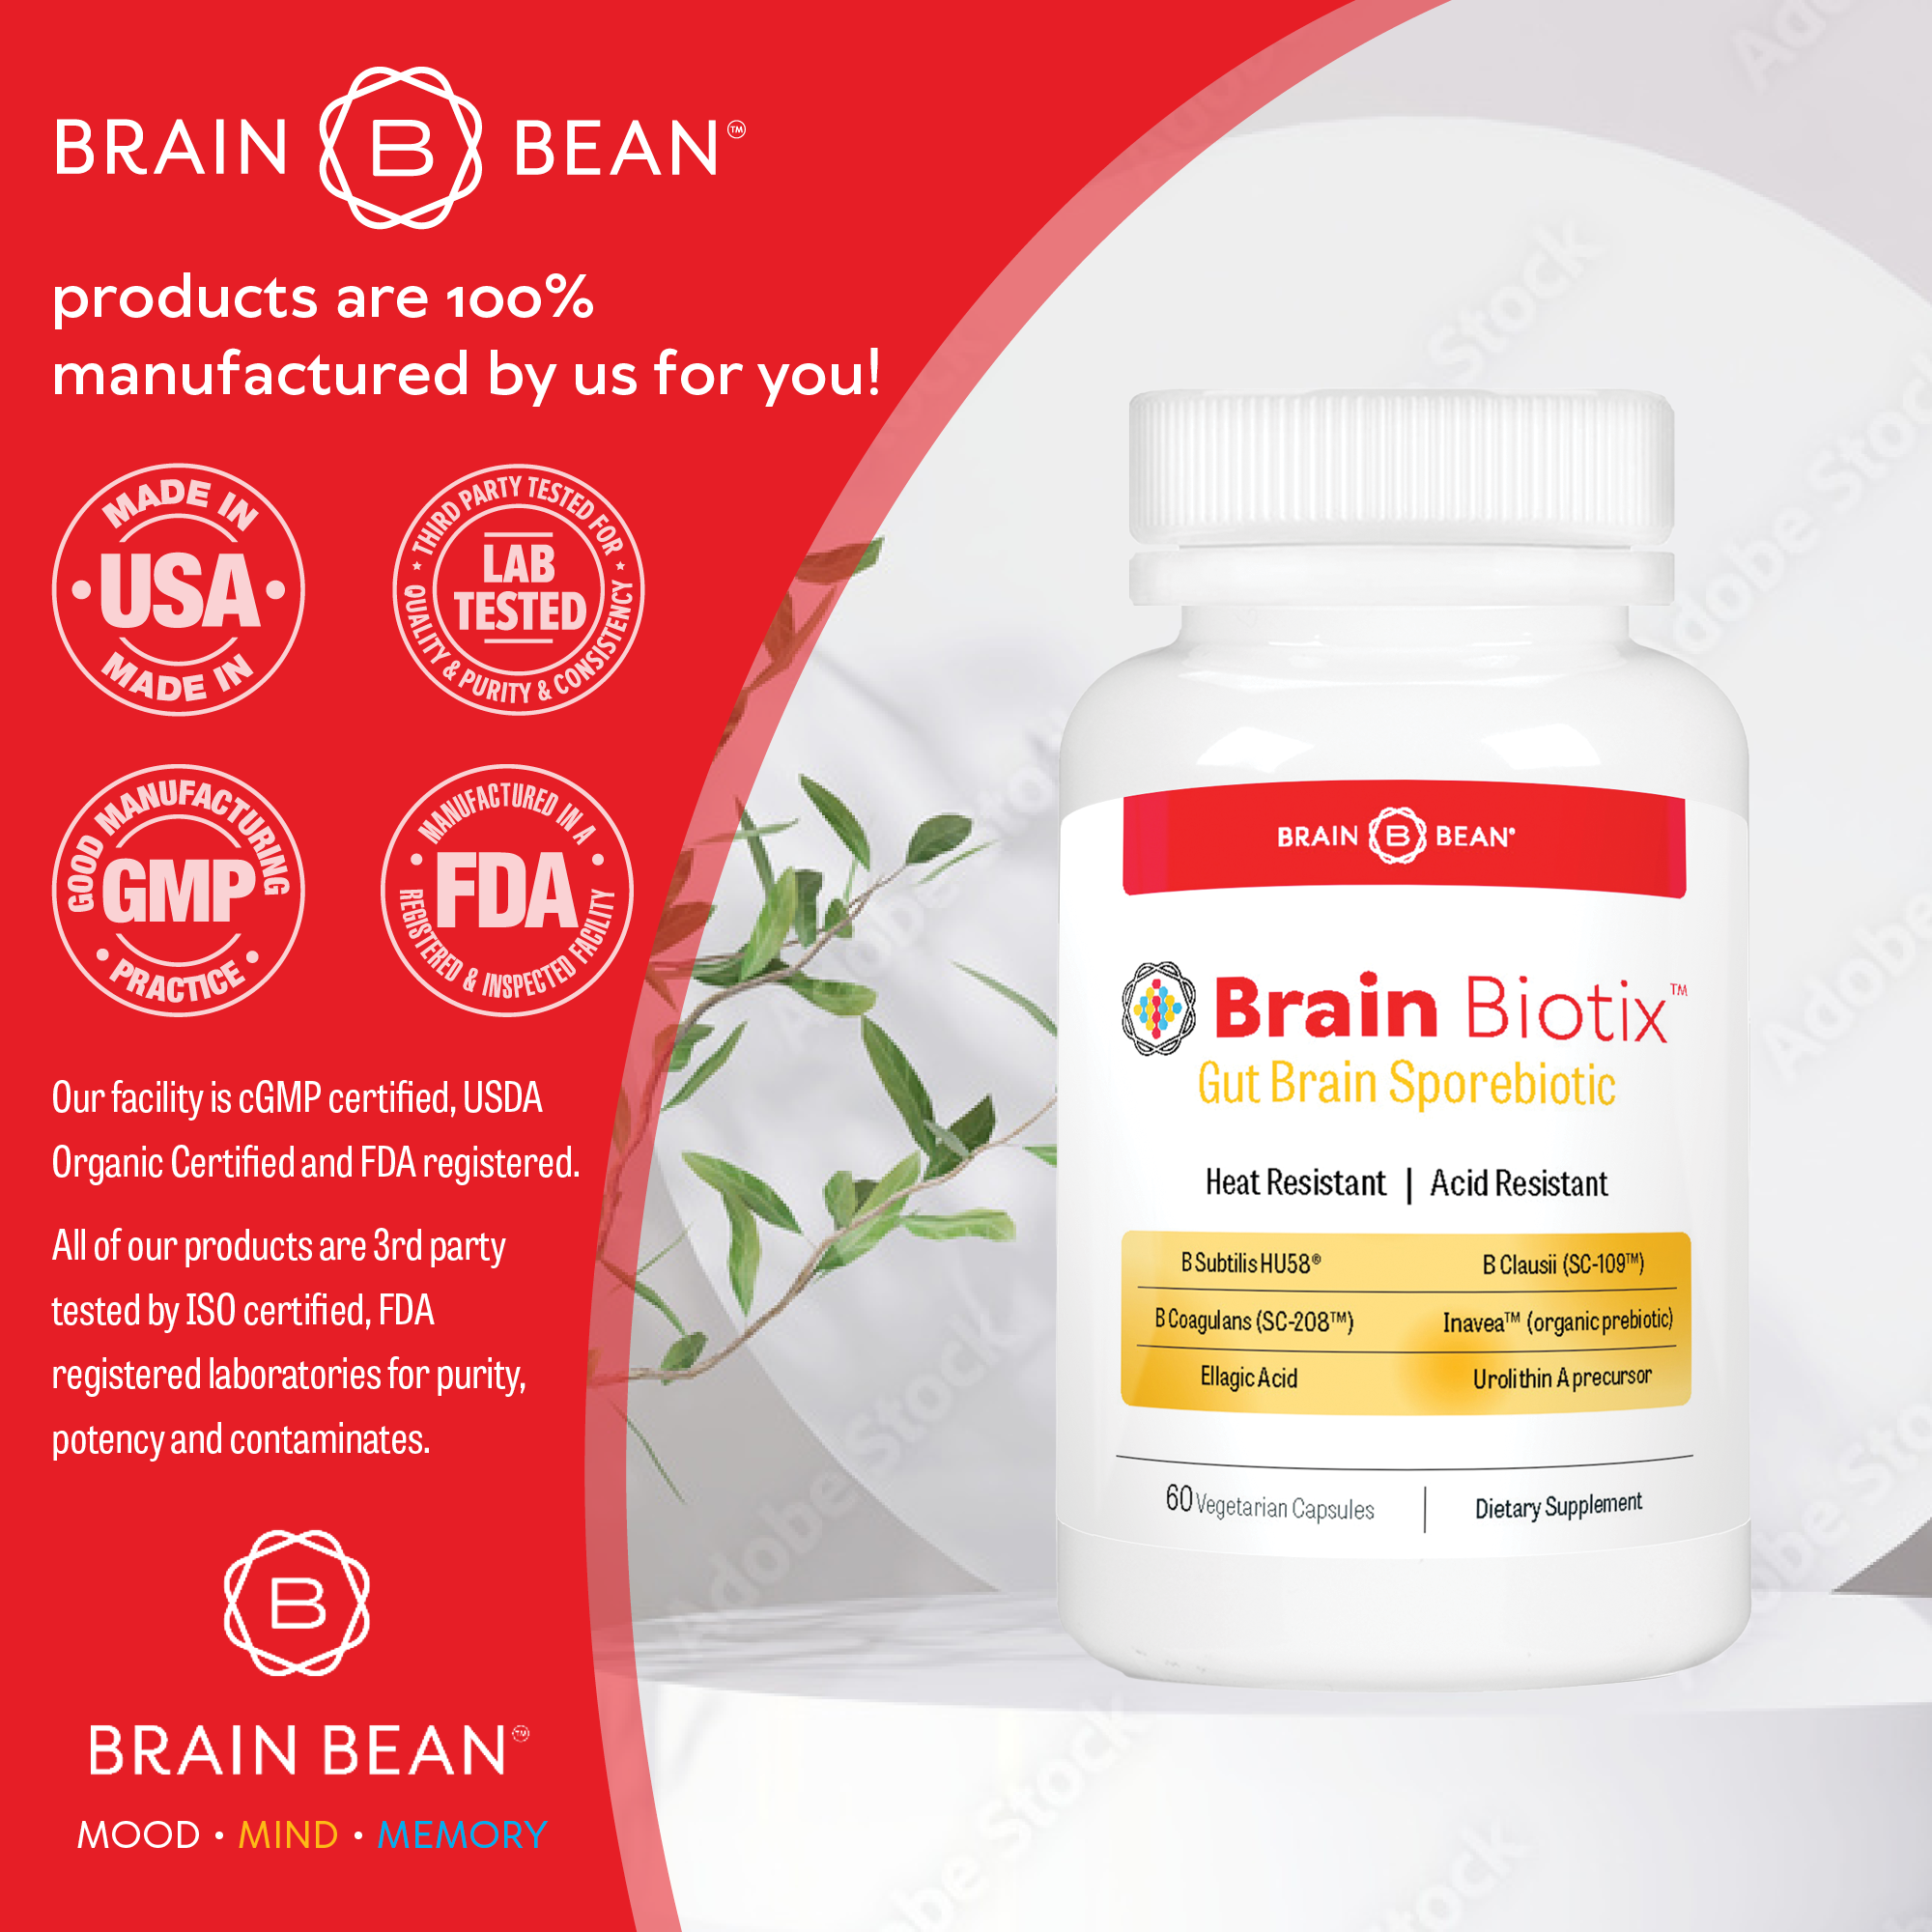 Brain Biotix™